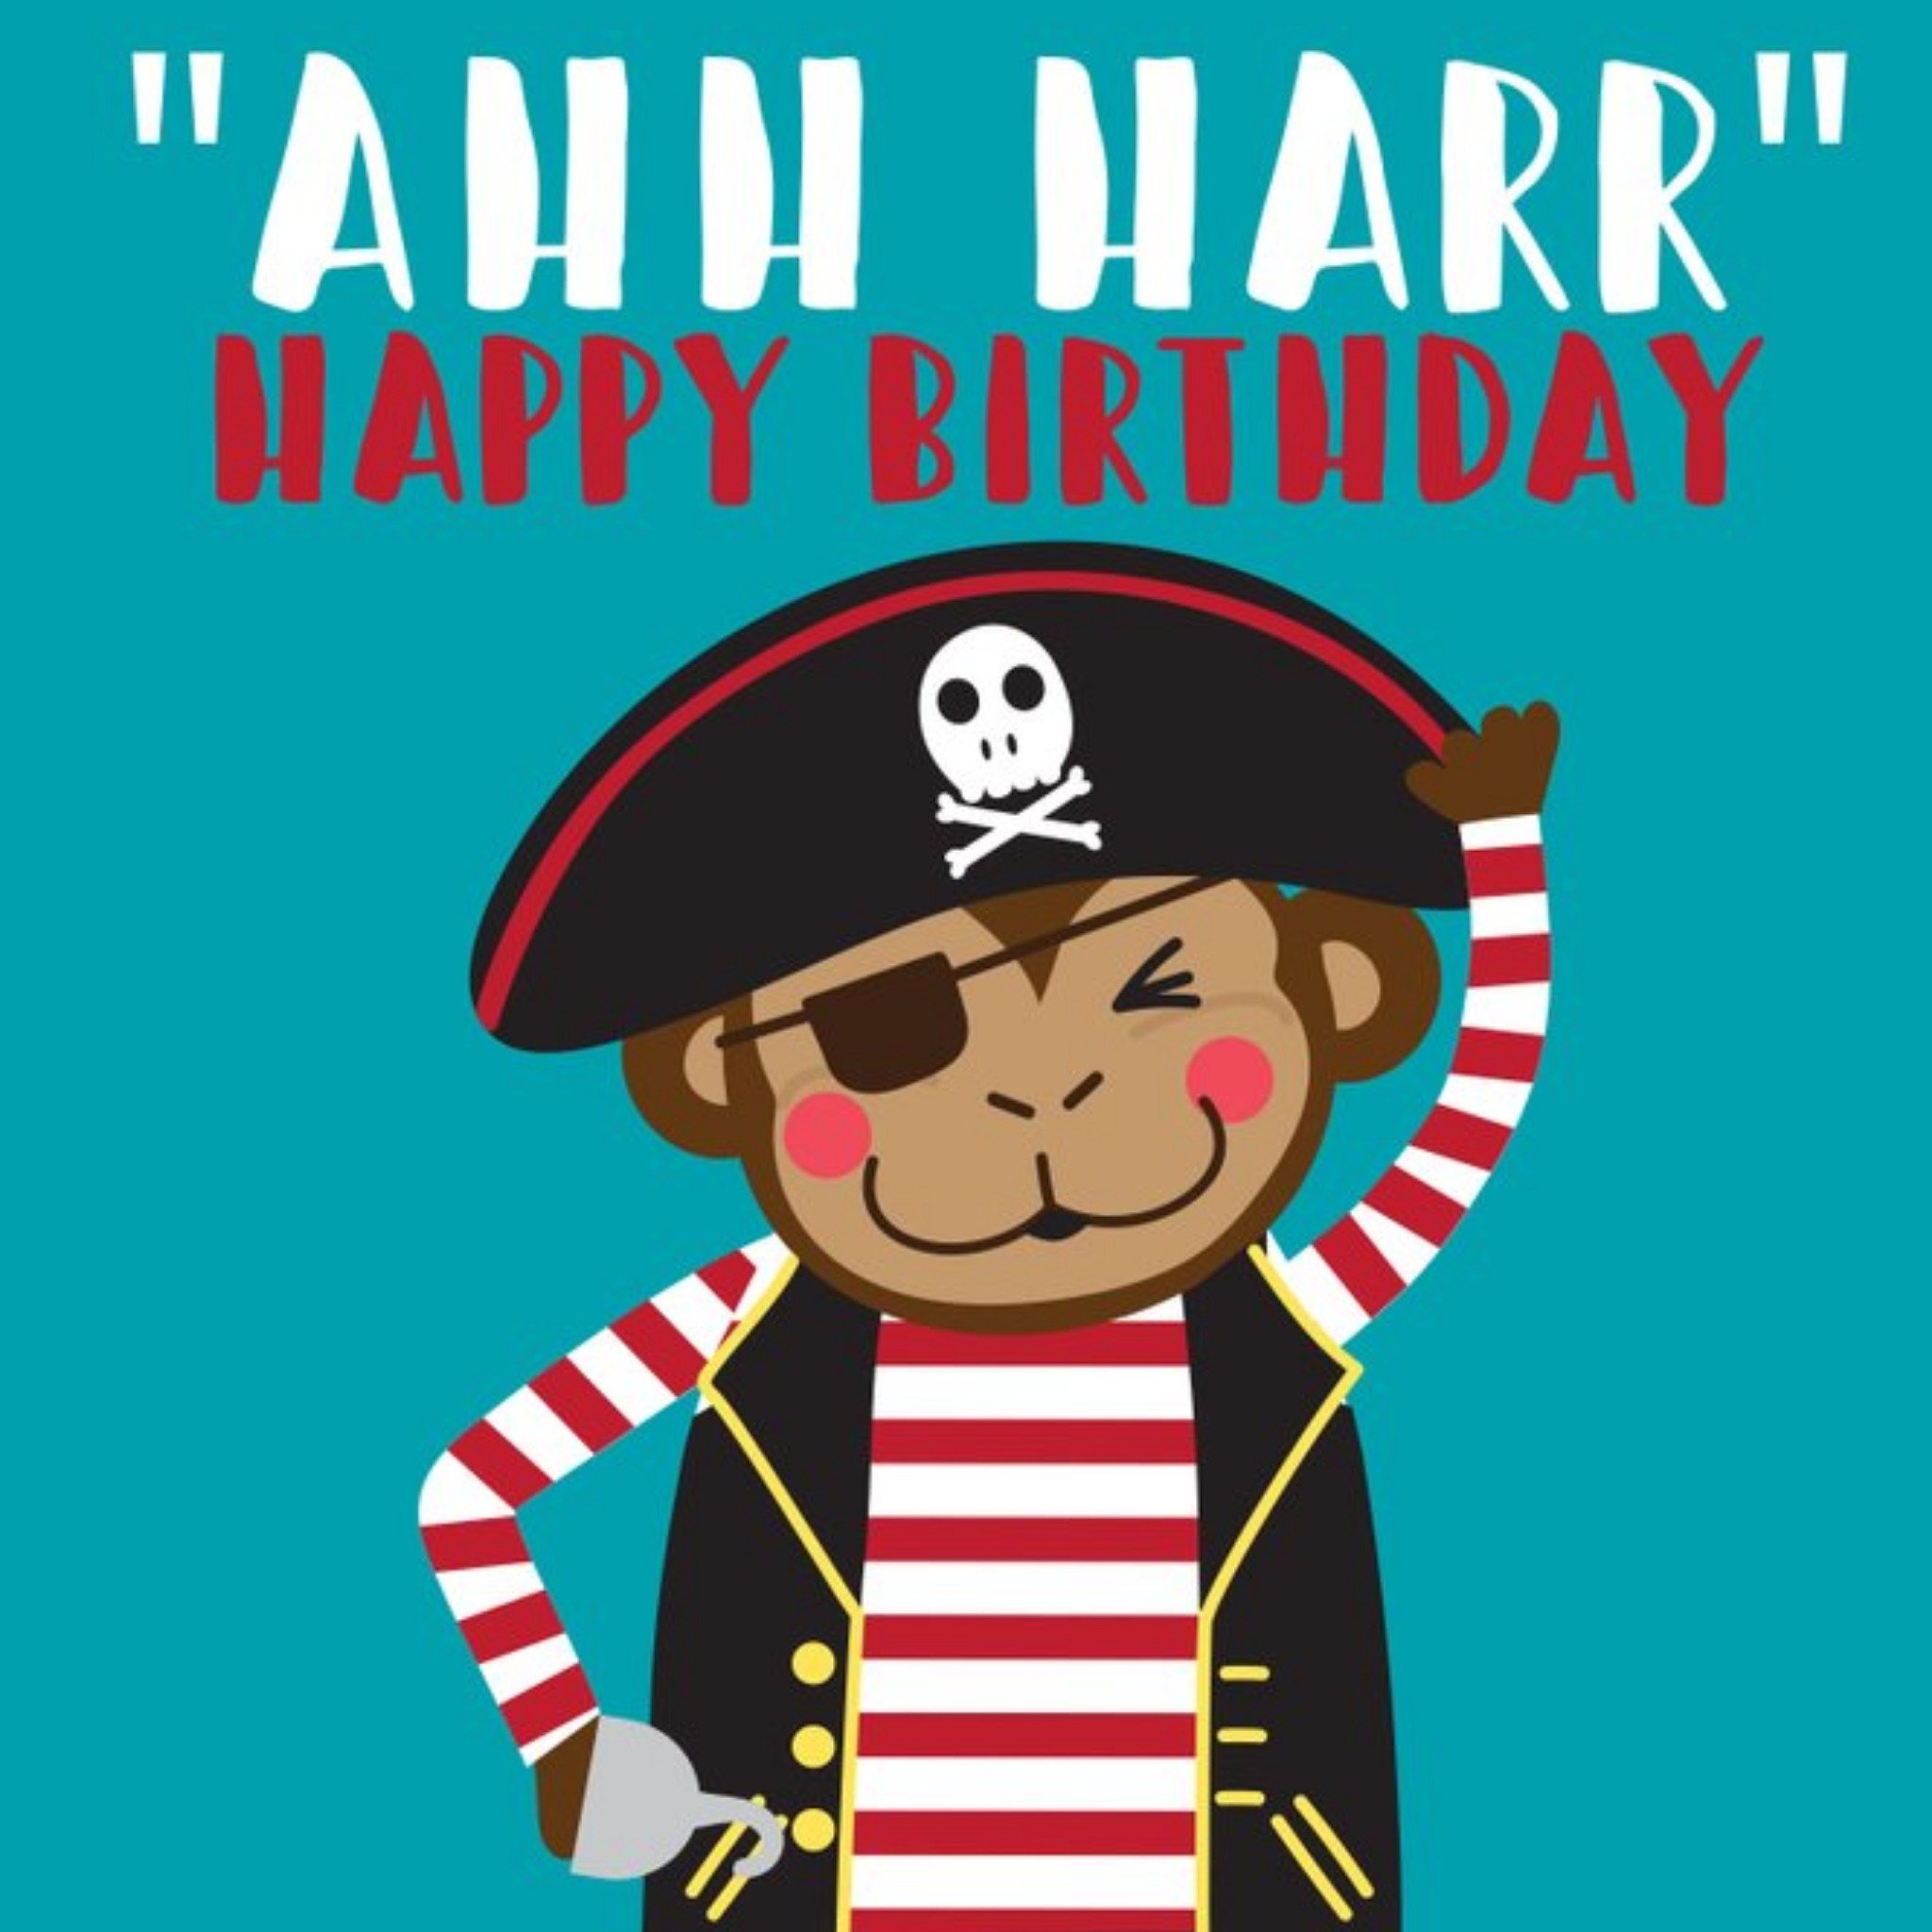 Moonpig Cute Monkey Pirate Ahh Harr Birthday Card, Large